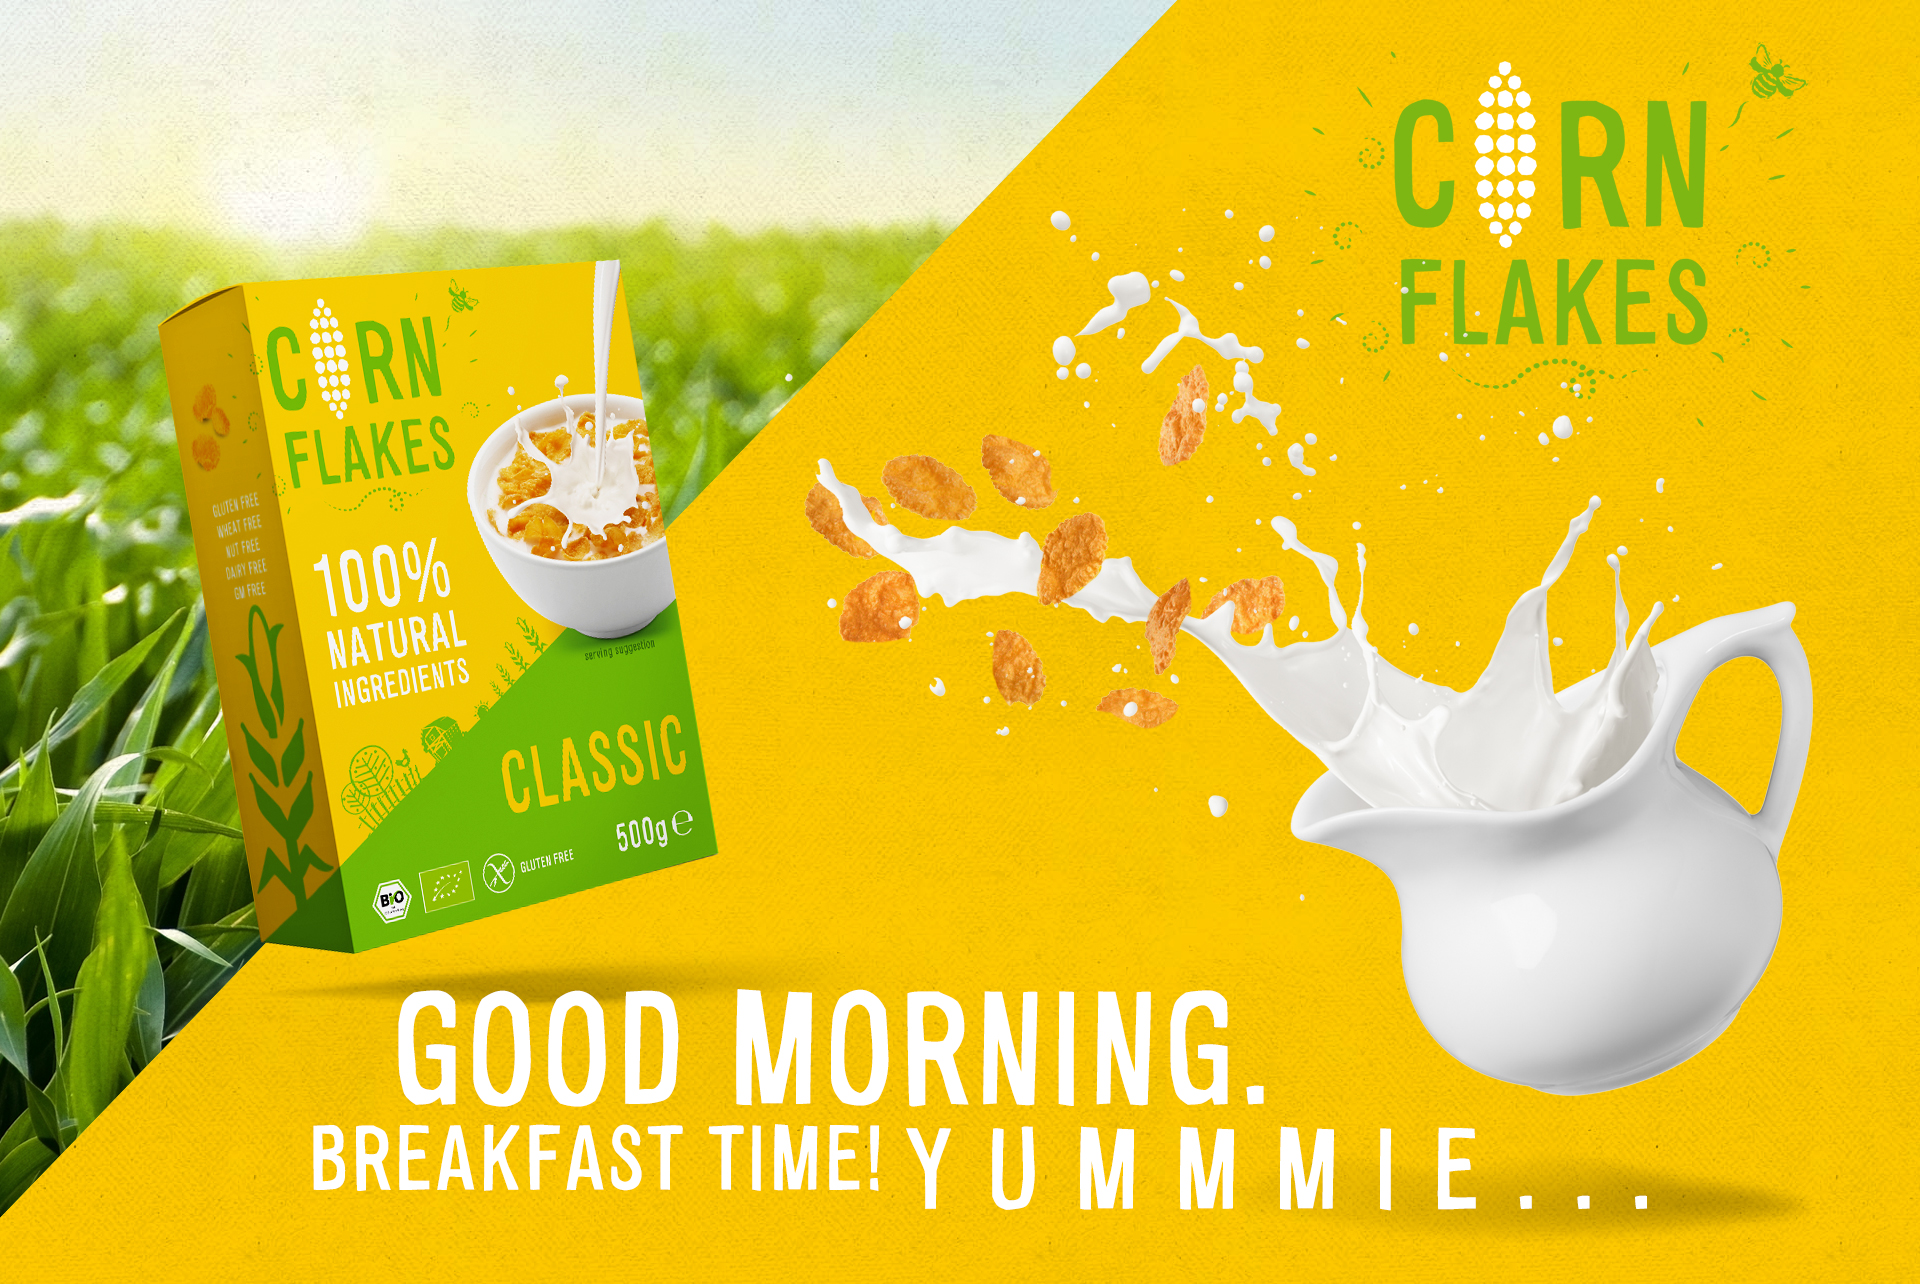 Corn Flakes Packaging Design KeyVisual